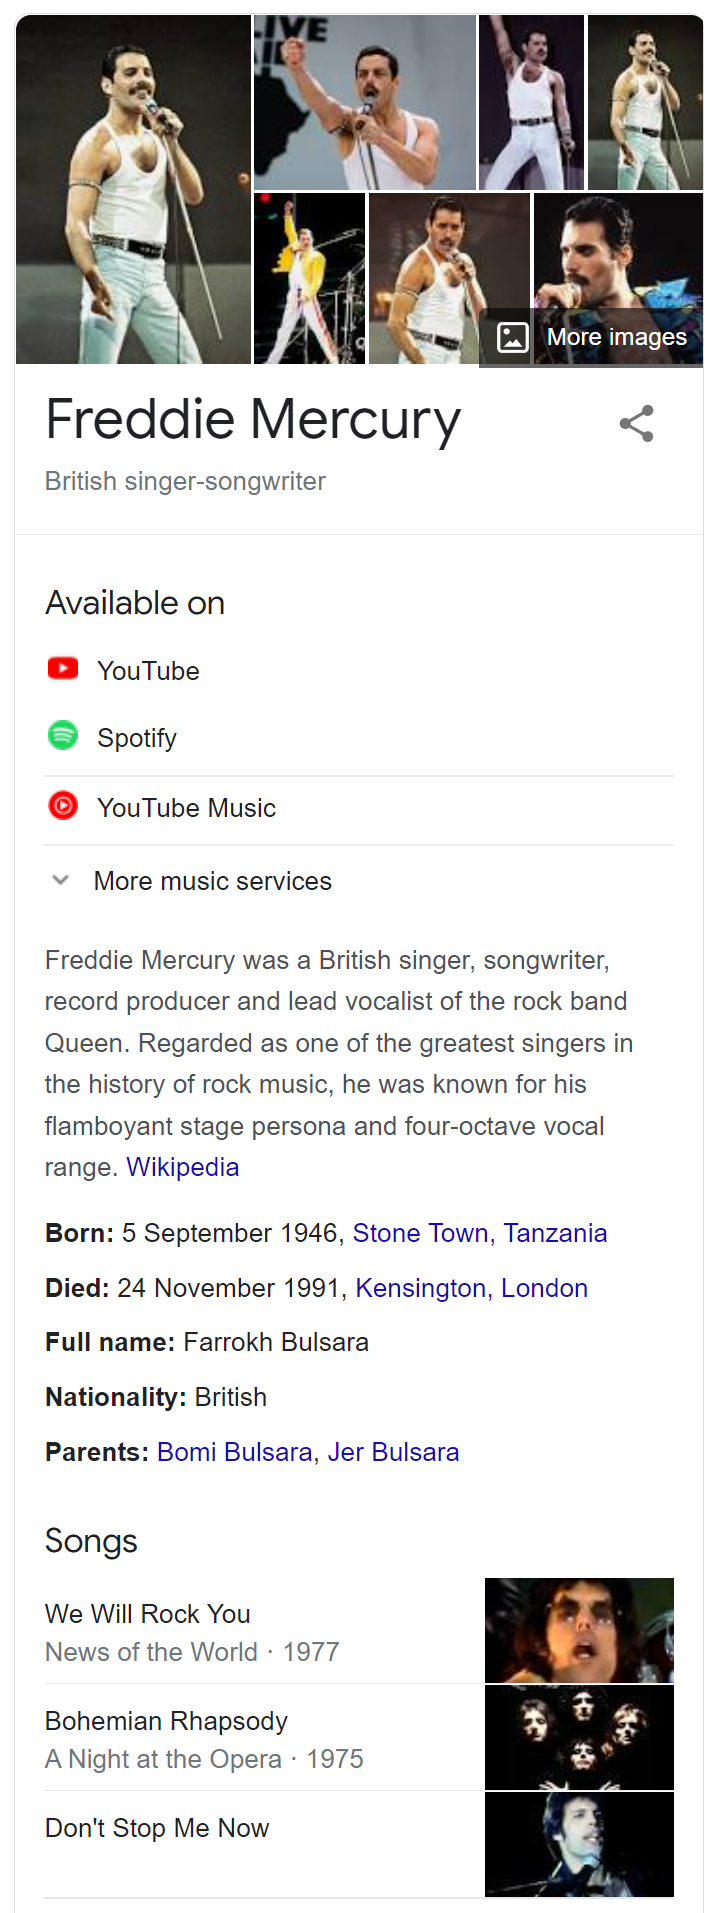 Freddie Mercury knowledge panel example image